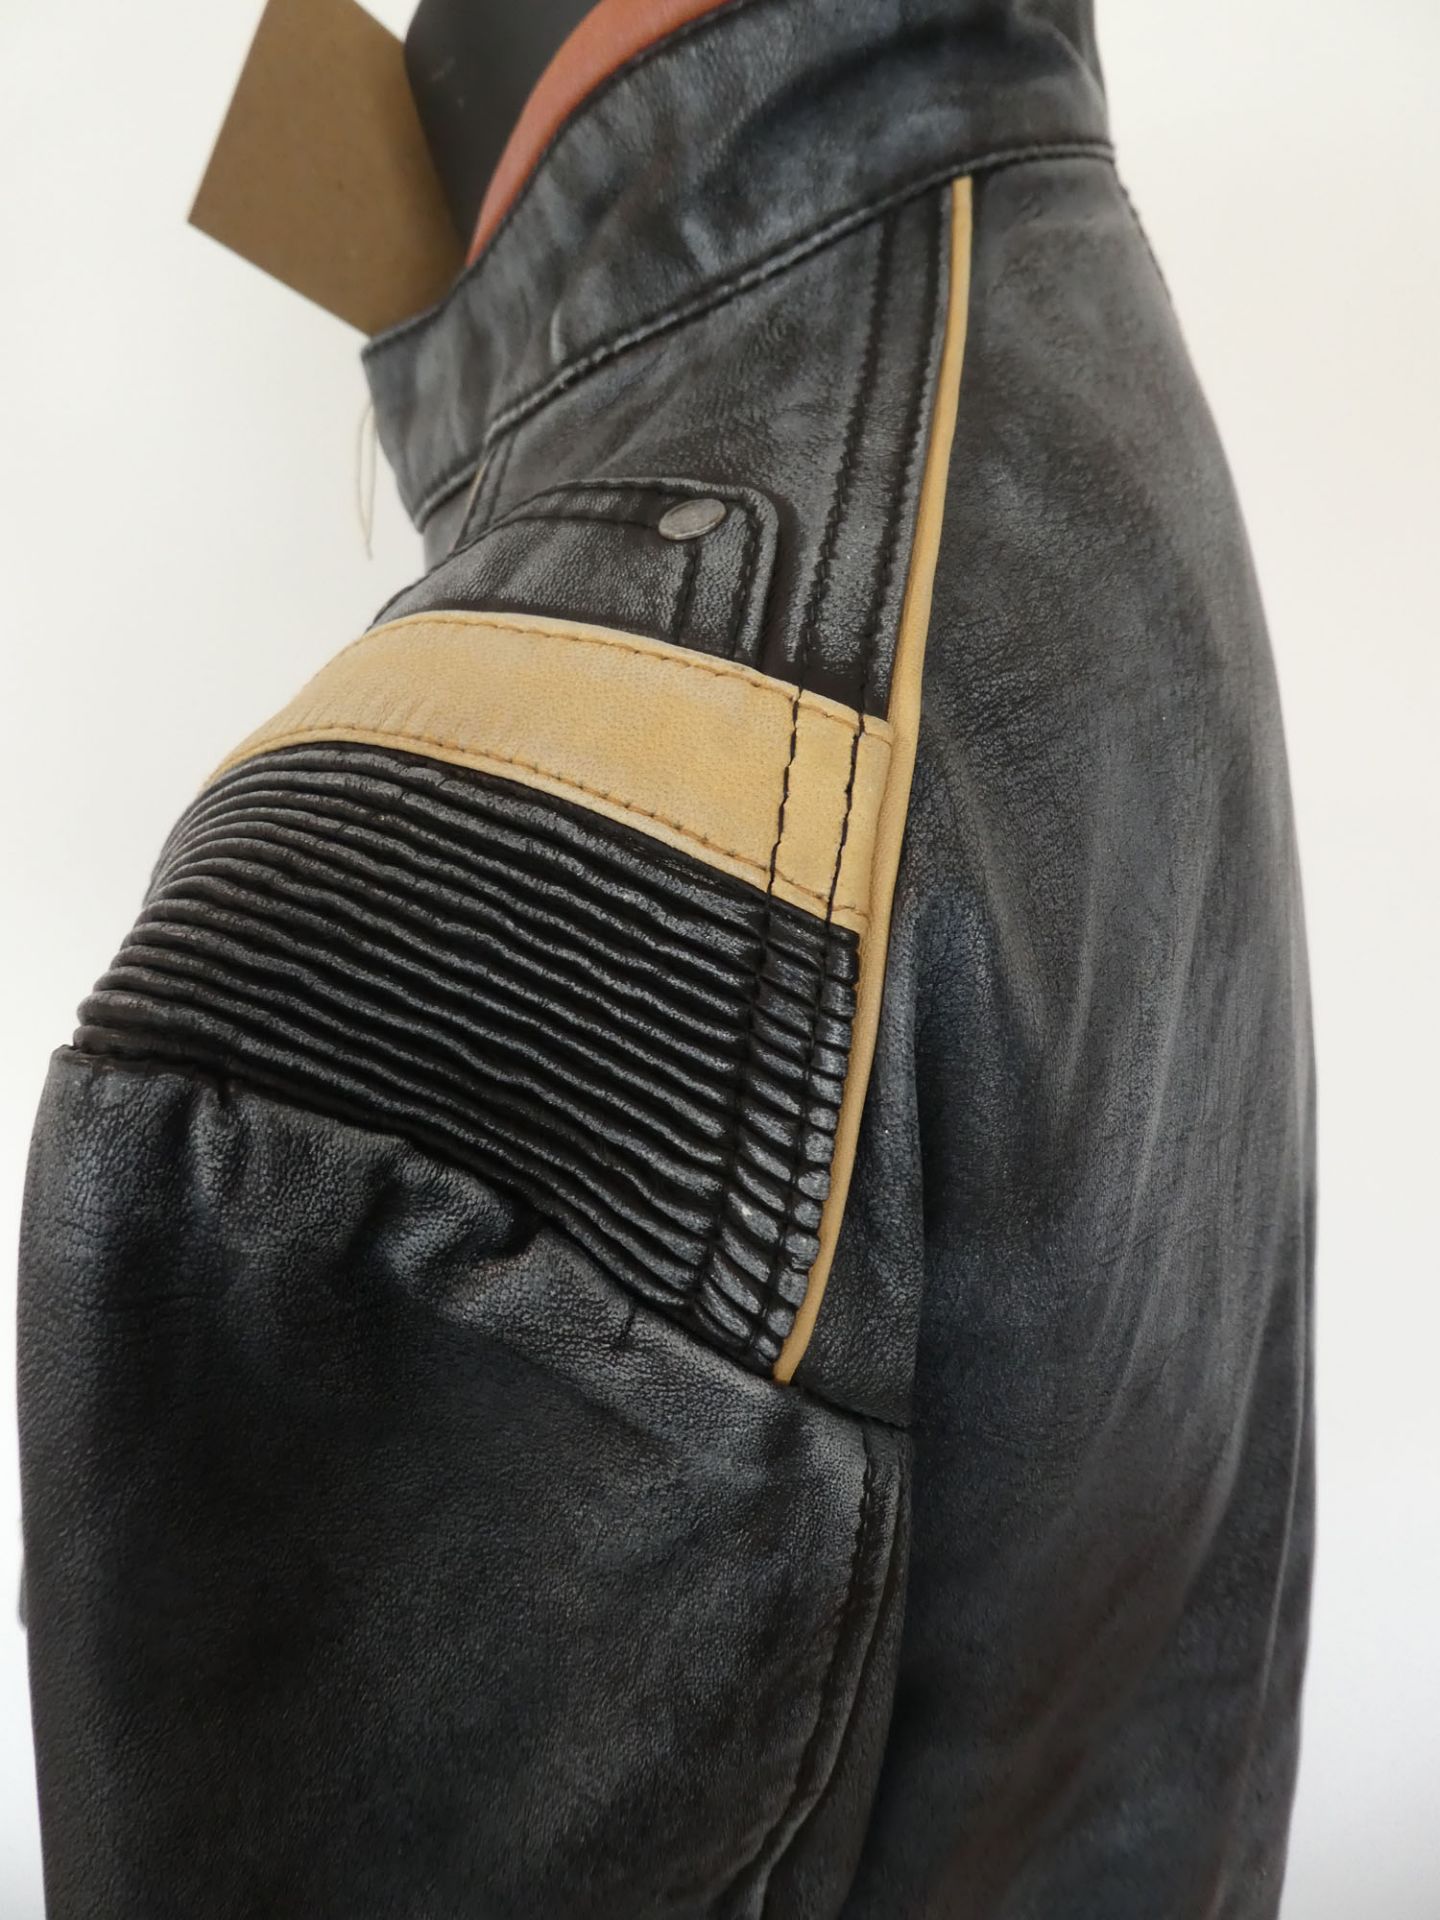 Cavani Leather men's vintage biker jacket in grey size XL - Image 2 of 3